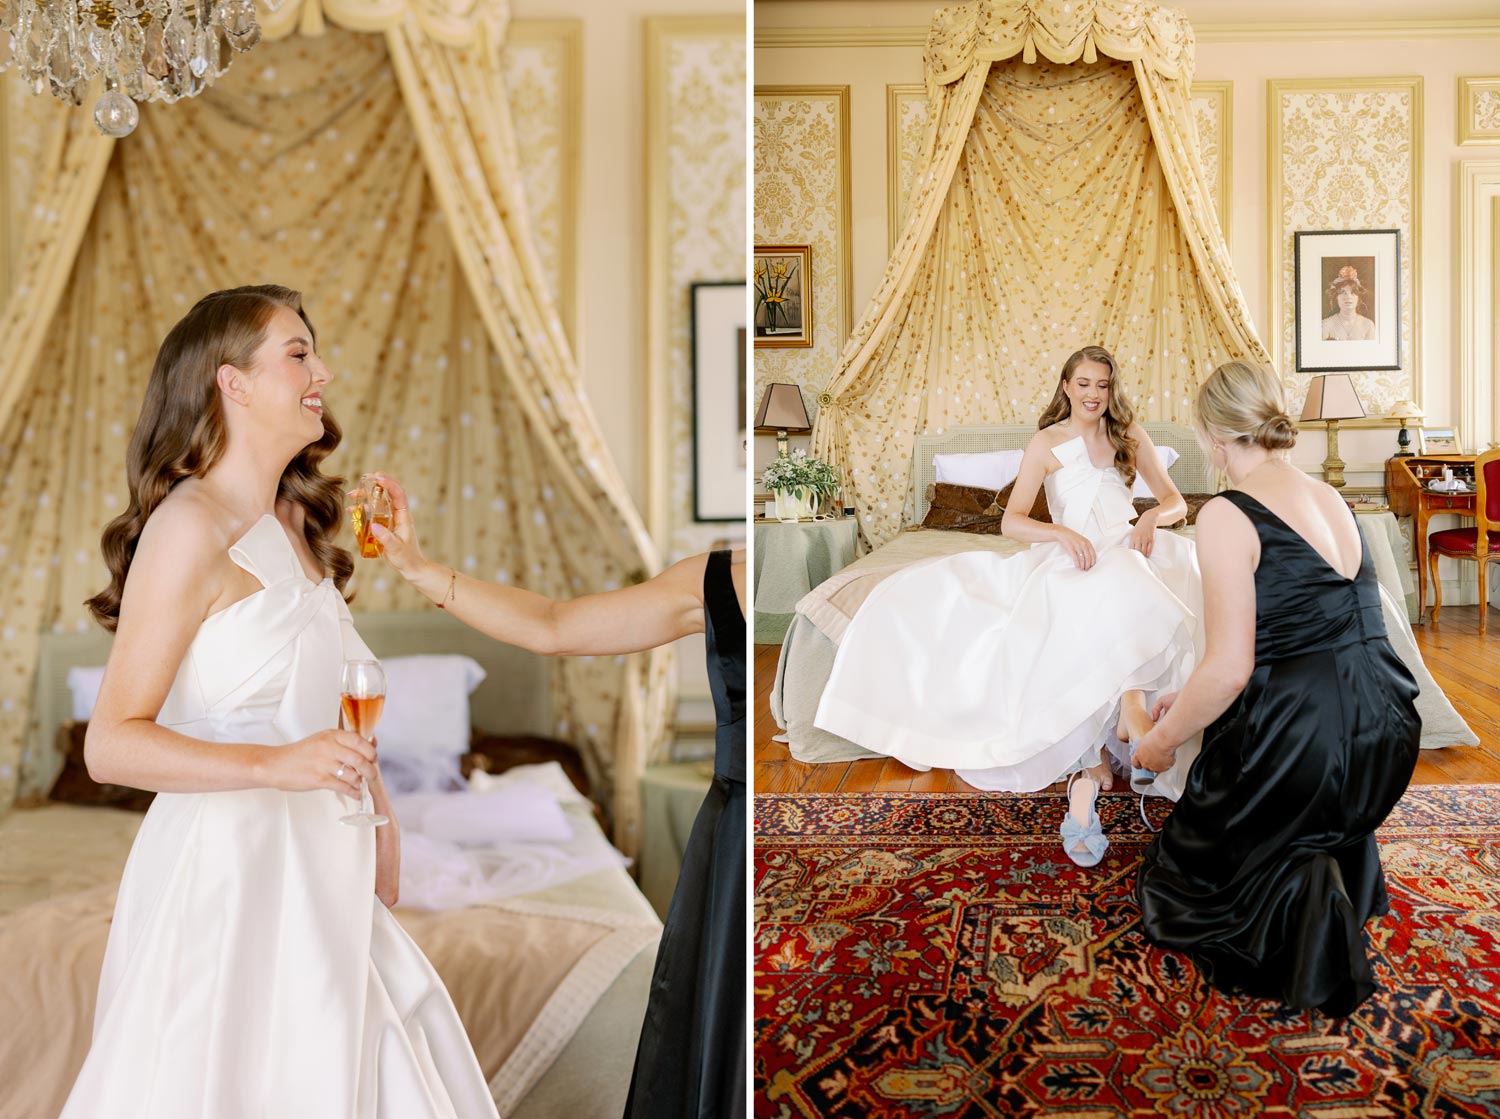 A bride at Chateau Pape Clement applies perfume